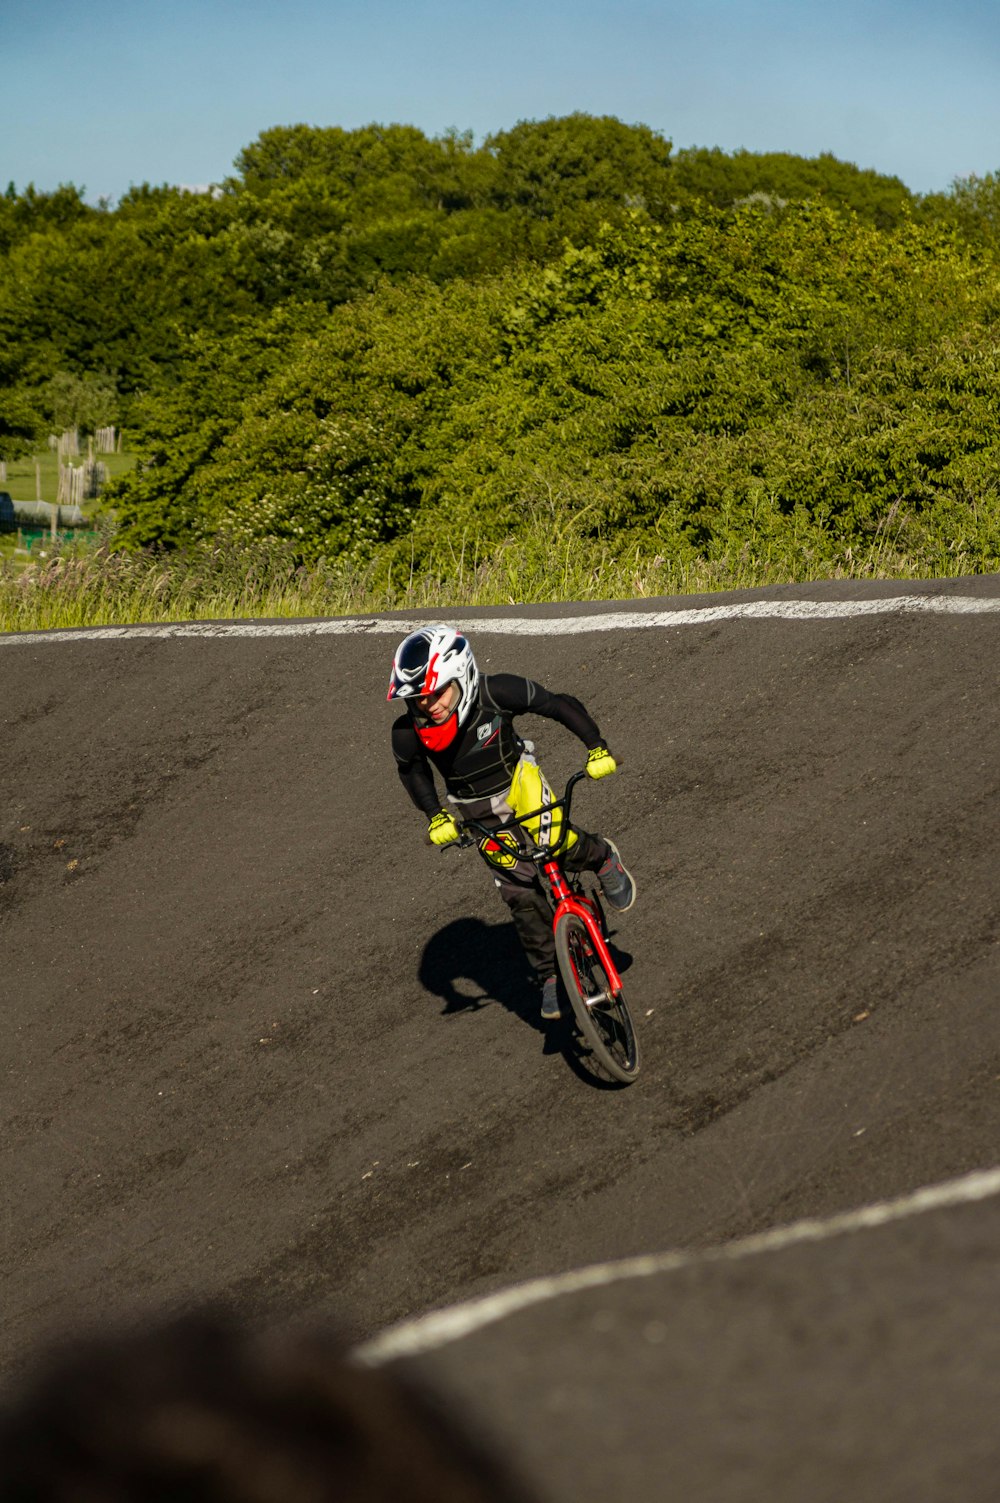 a man riding a dirt bike on a race track